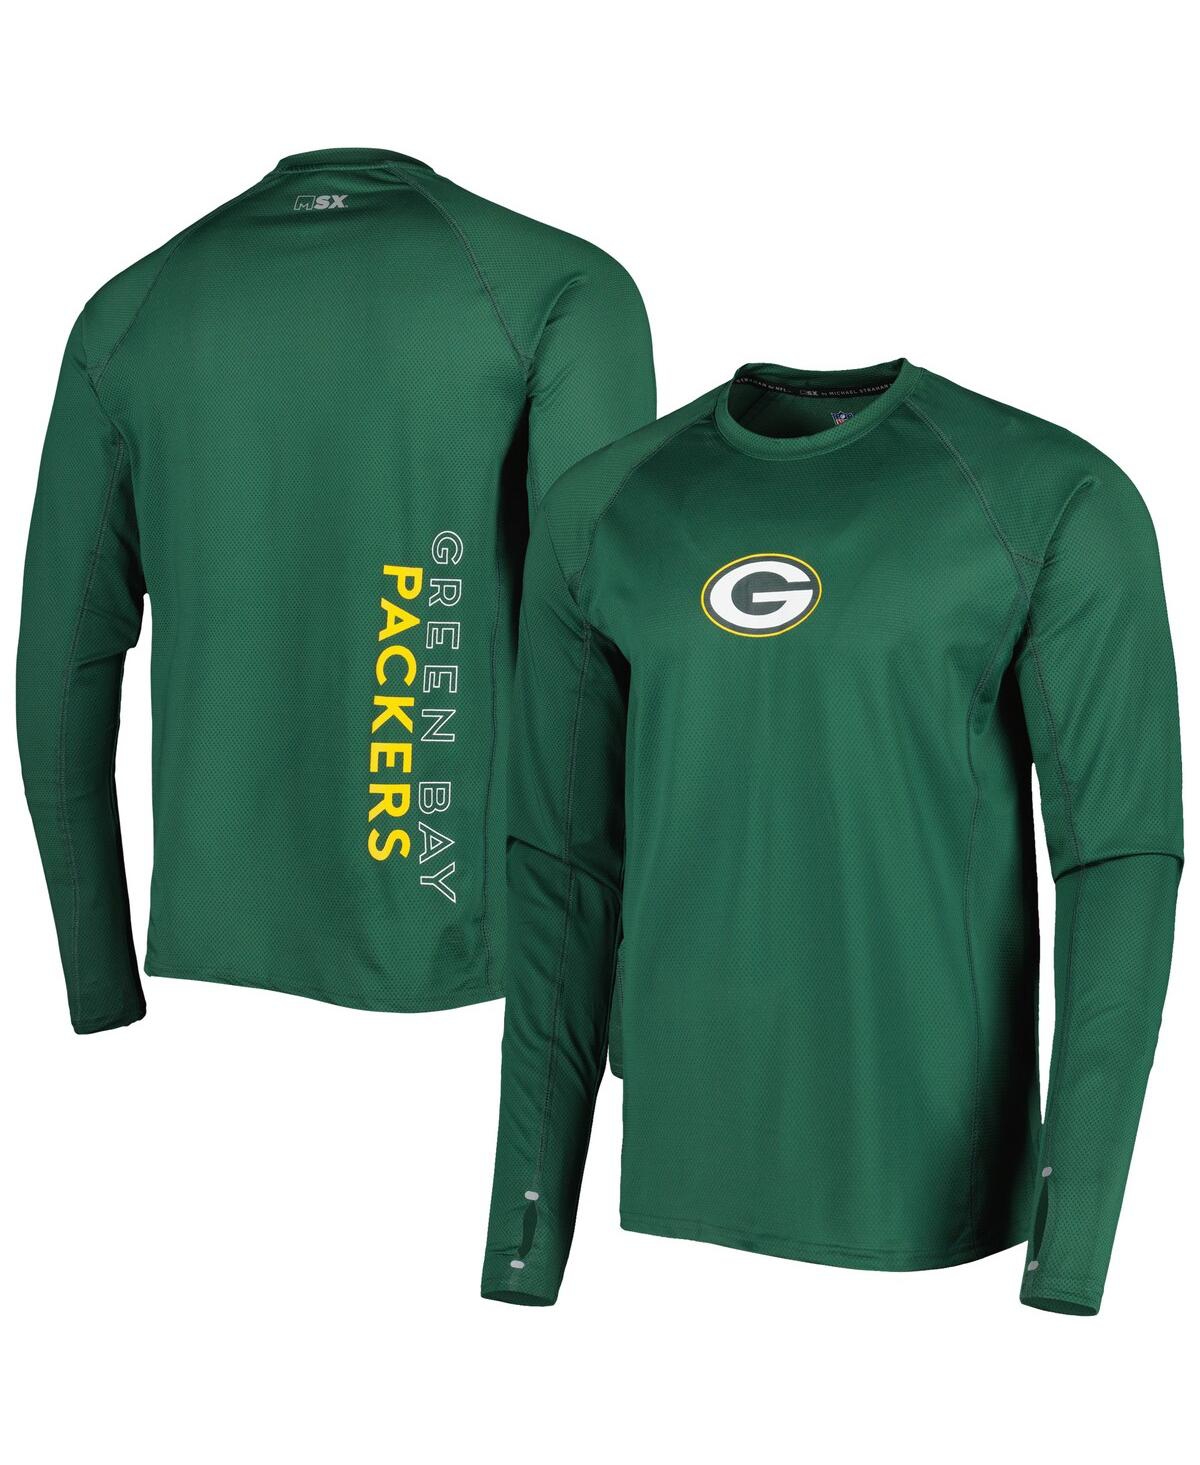 Men's Msx by Michael Strahan Green Green Bay Packers Interval Long Sleeve Raglan T-shirt - Green